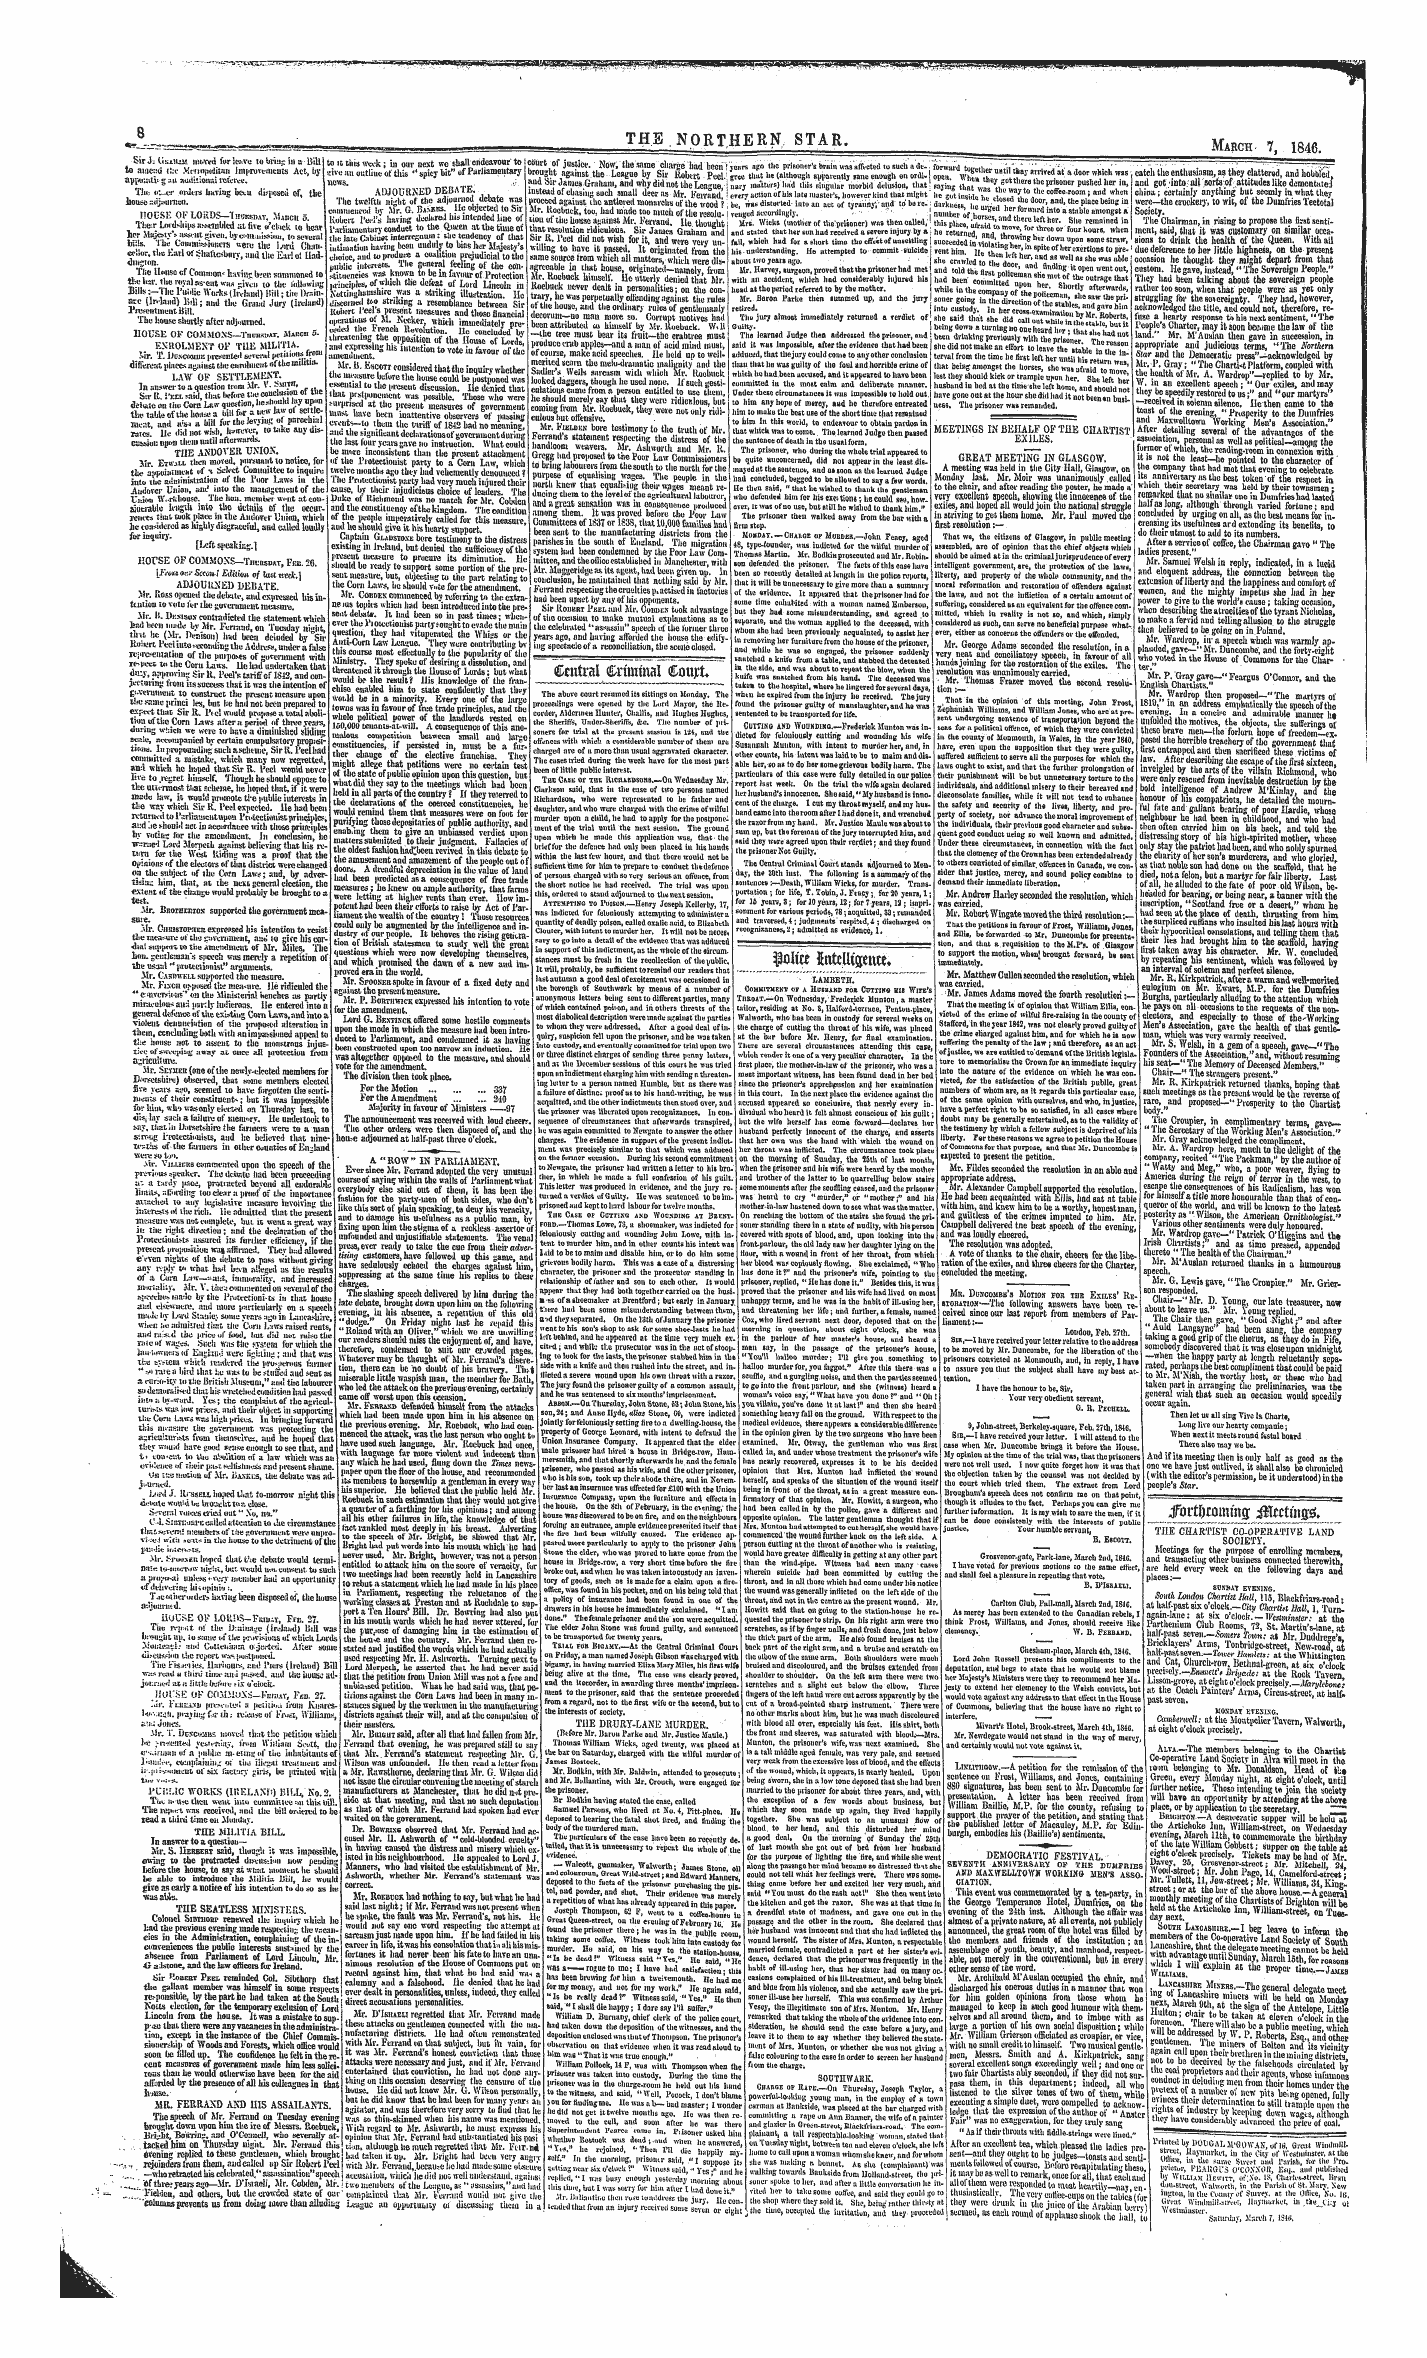 Northern Star (1837-1852): jS F Y, 1st edition - Police Intejlfeenfc